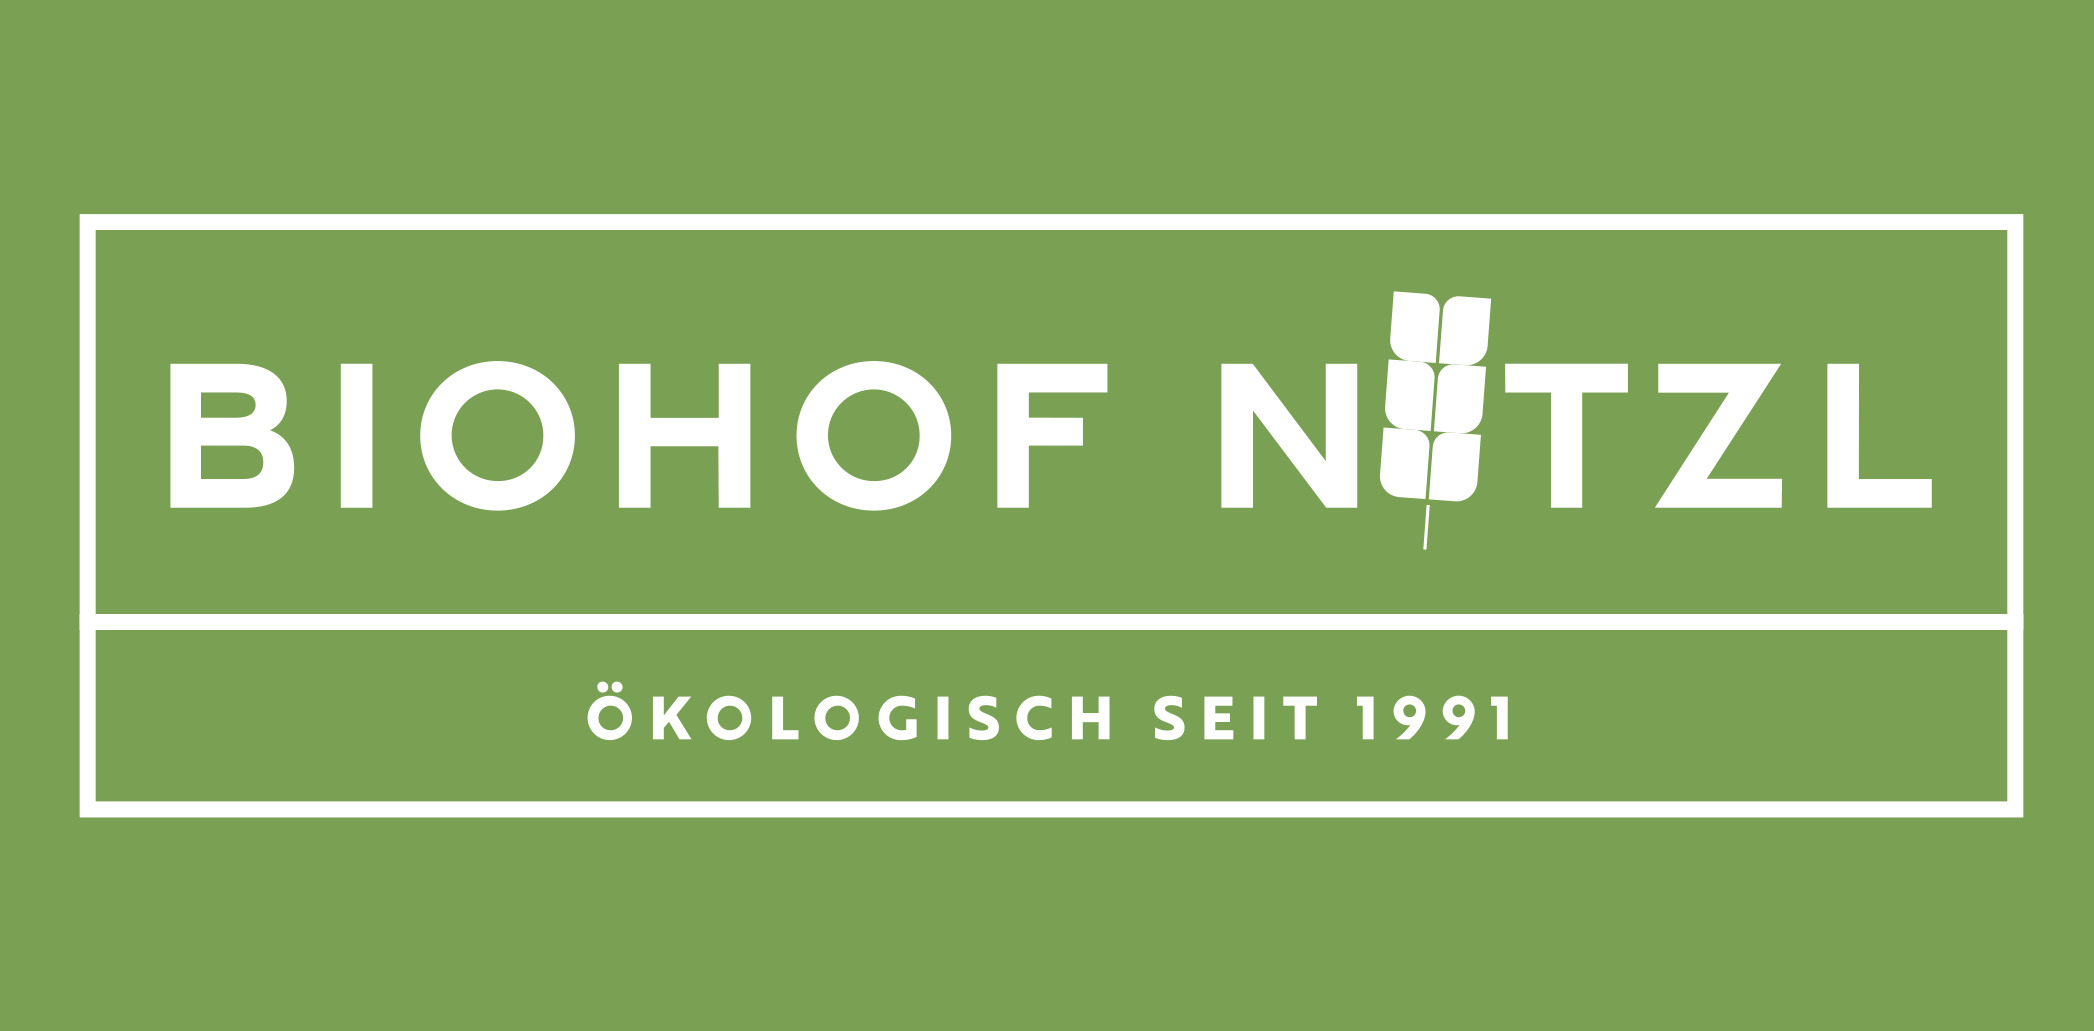 Biohof Nitzl